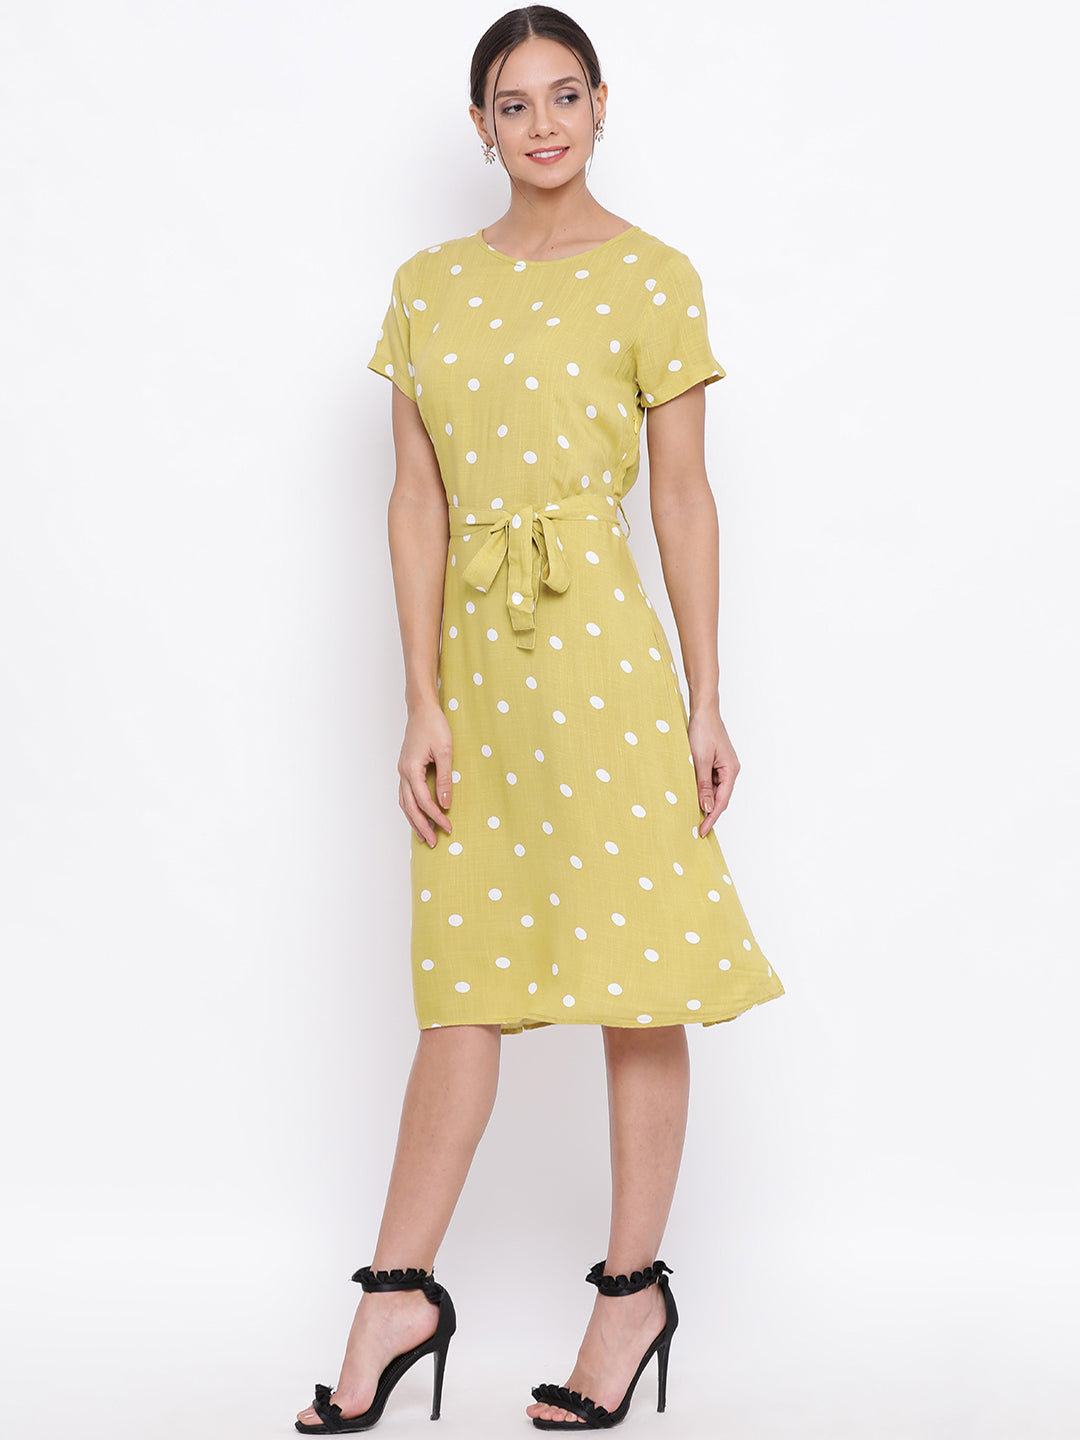 Yellow Printed Polka Dots Dress - Women Dresses